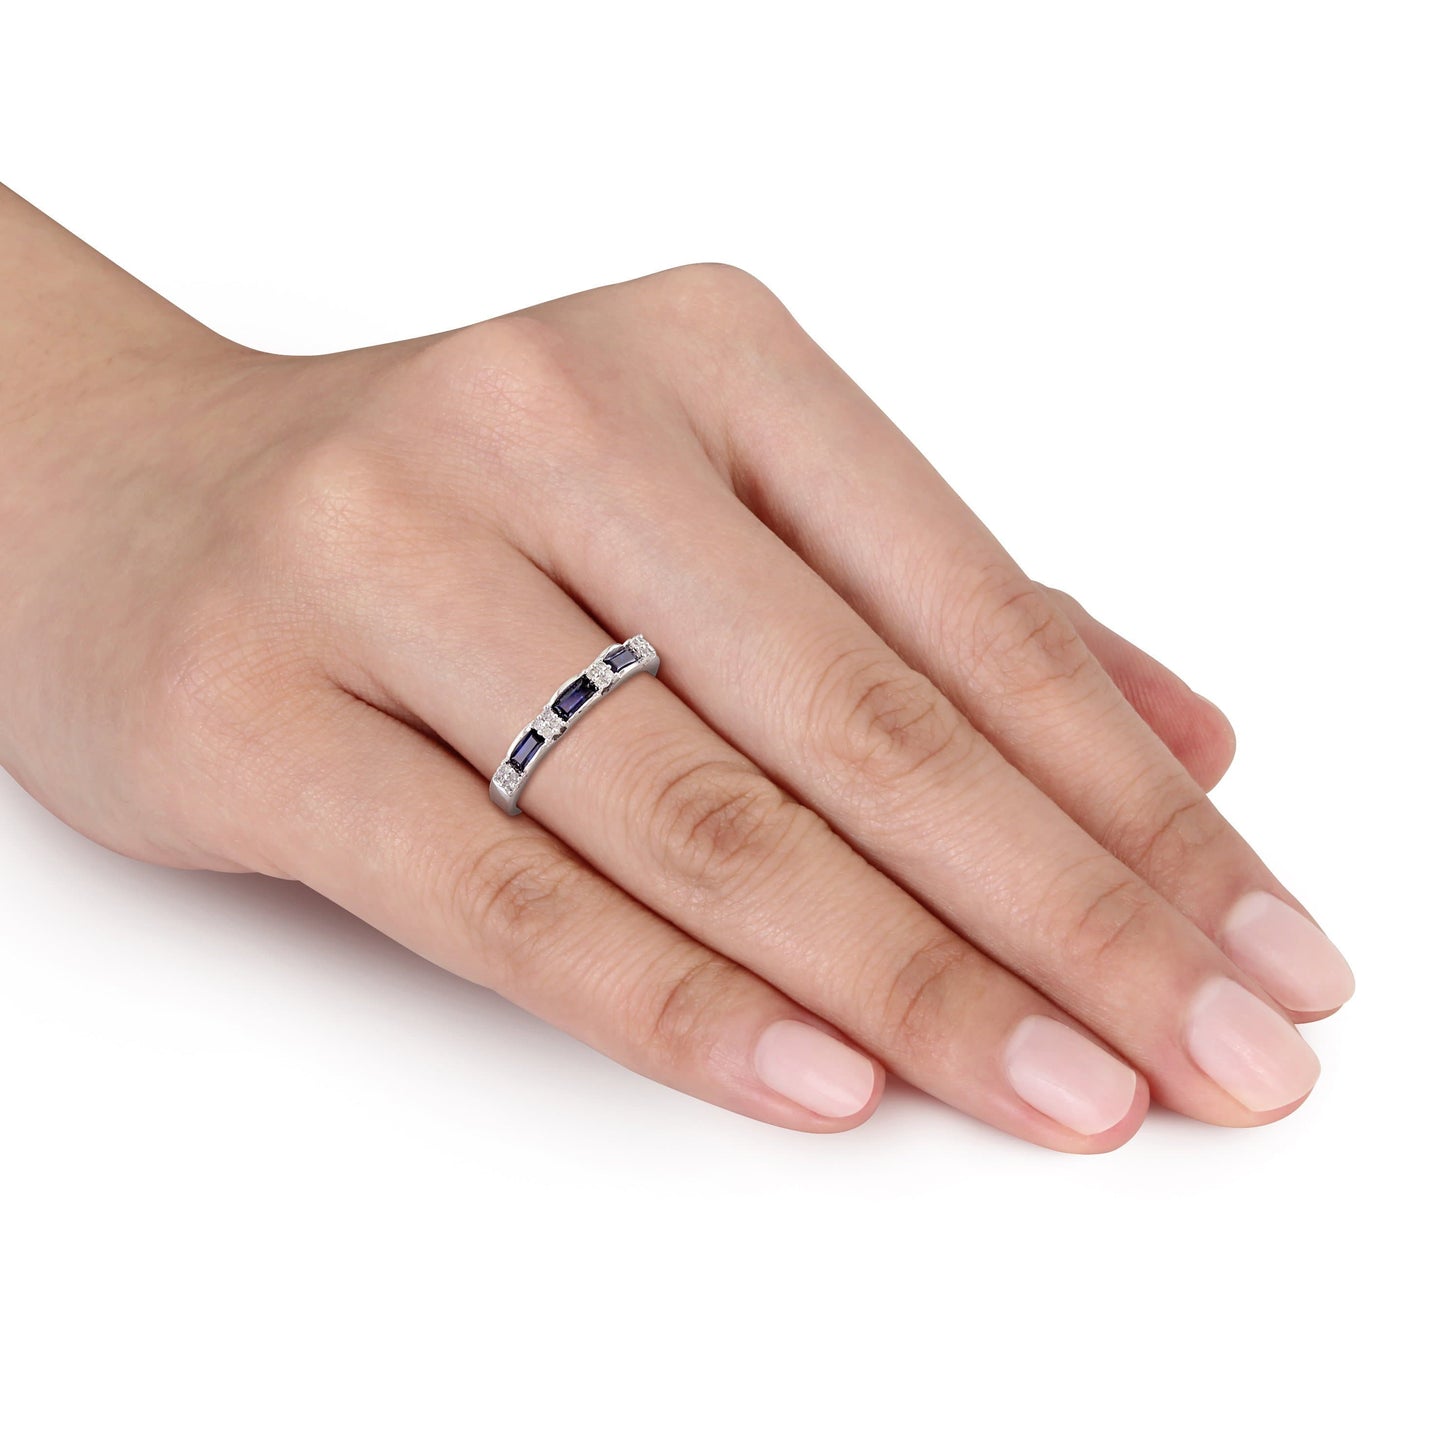 Diamond & Sapphire Eternity Ring in 10k White Gold